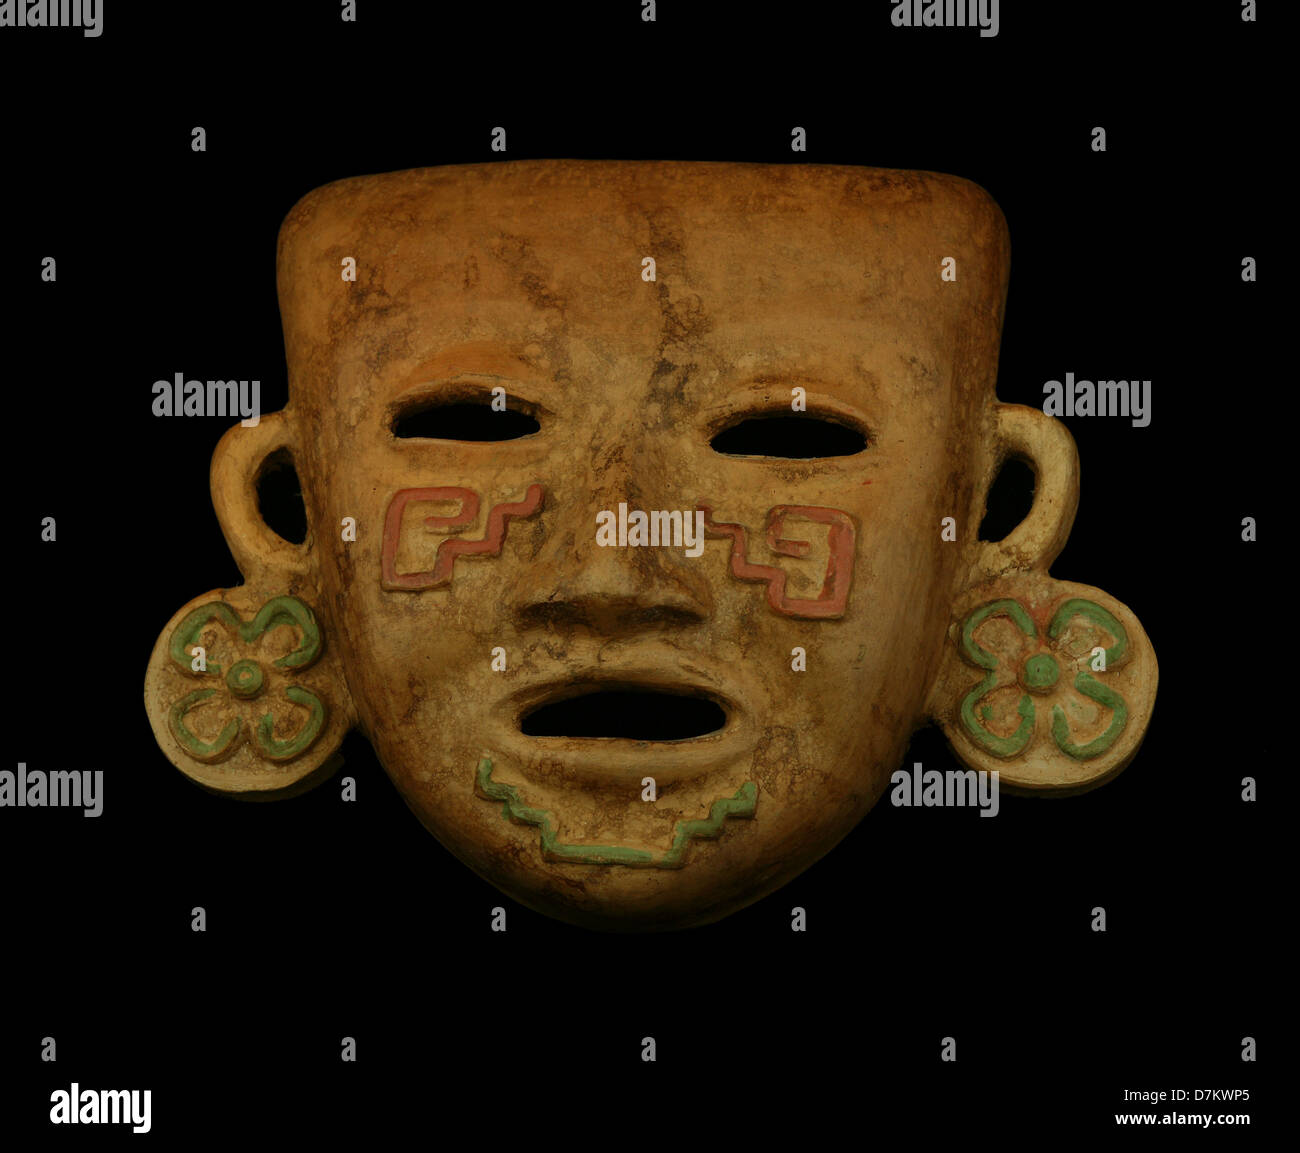 Mayan mask on a black background Stock Photo